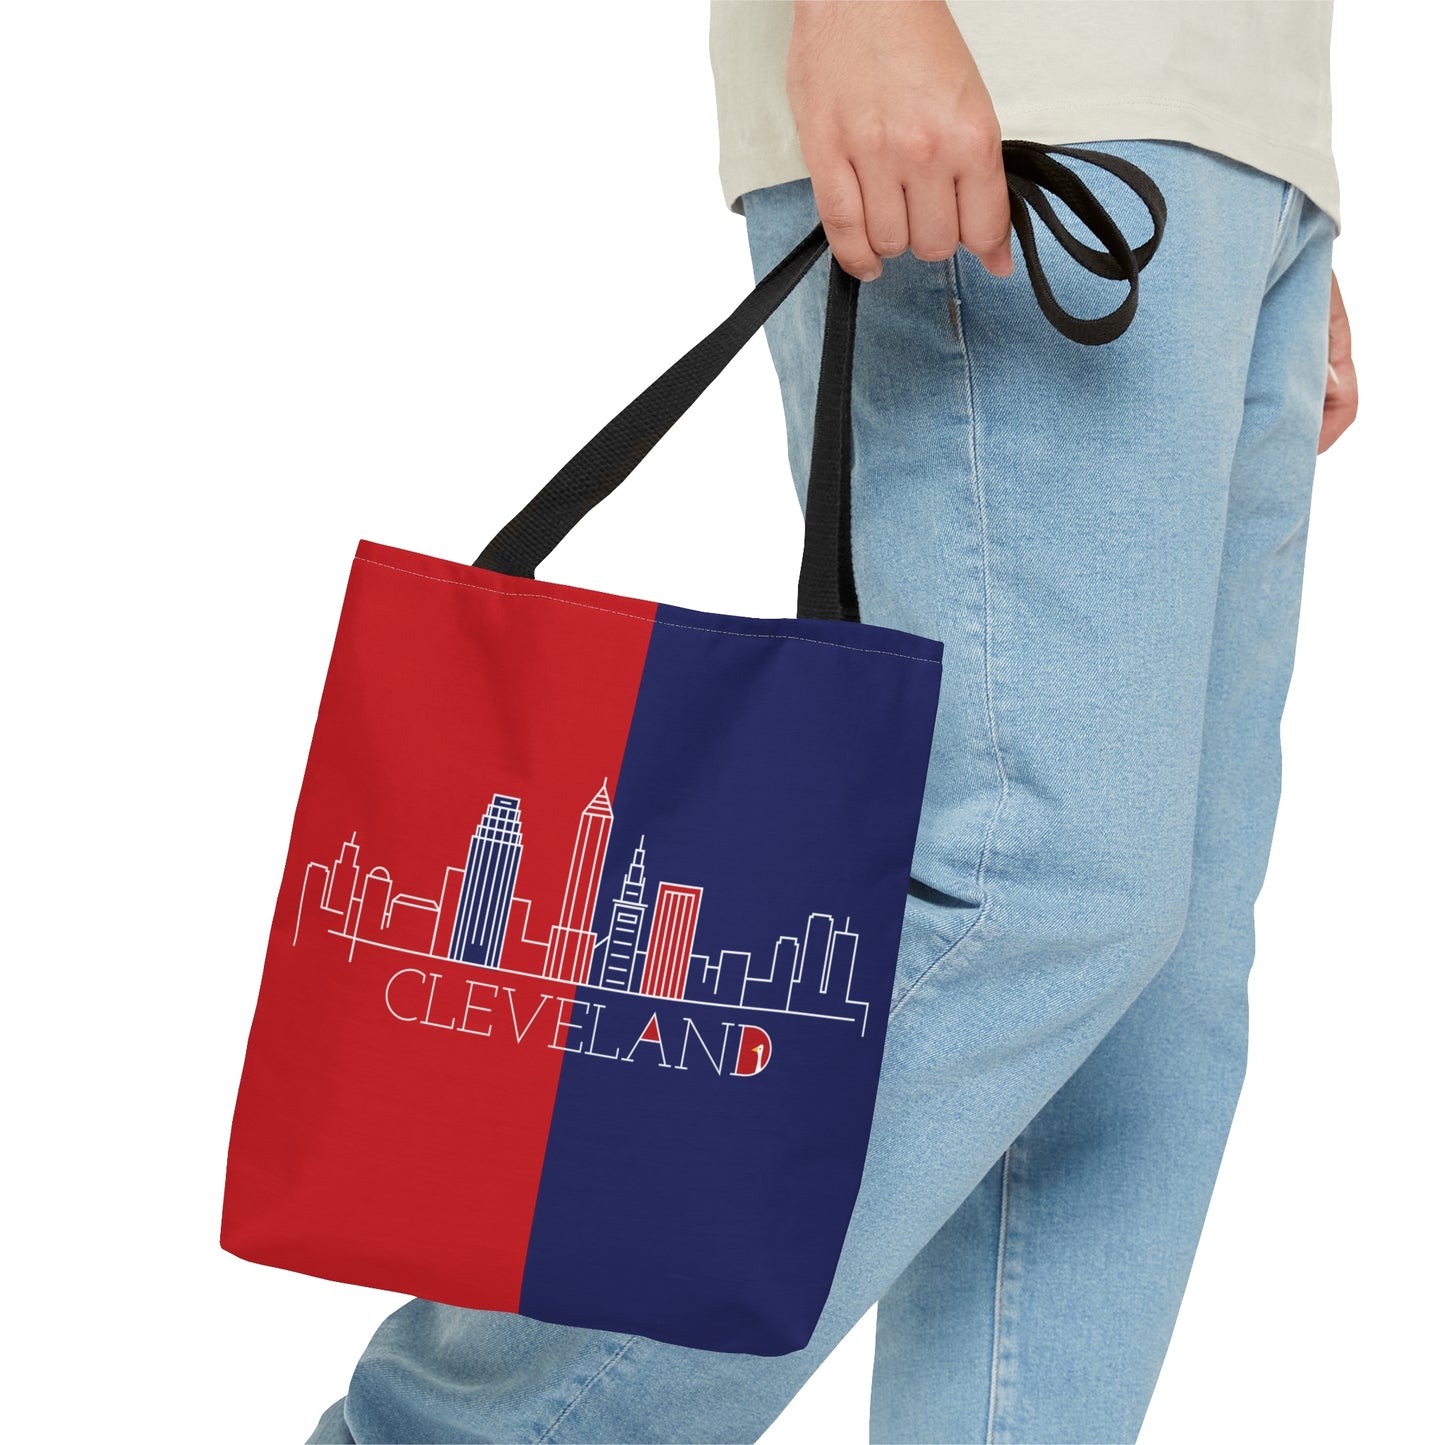 Celveland - Red White and Blue City series - Logo - Tote Bag